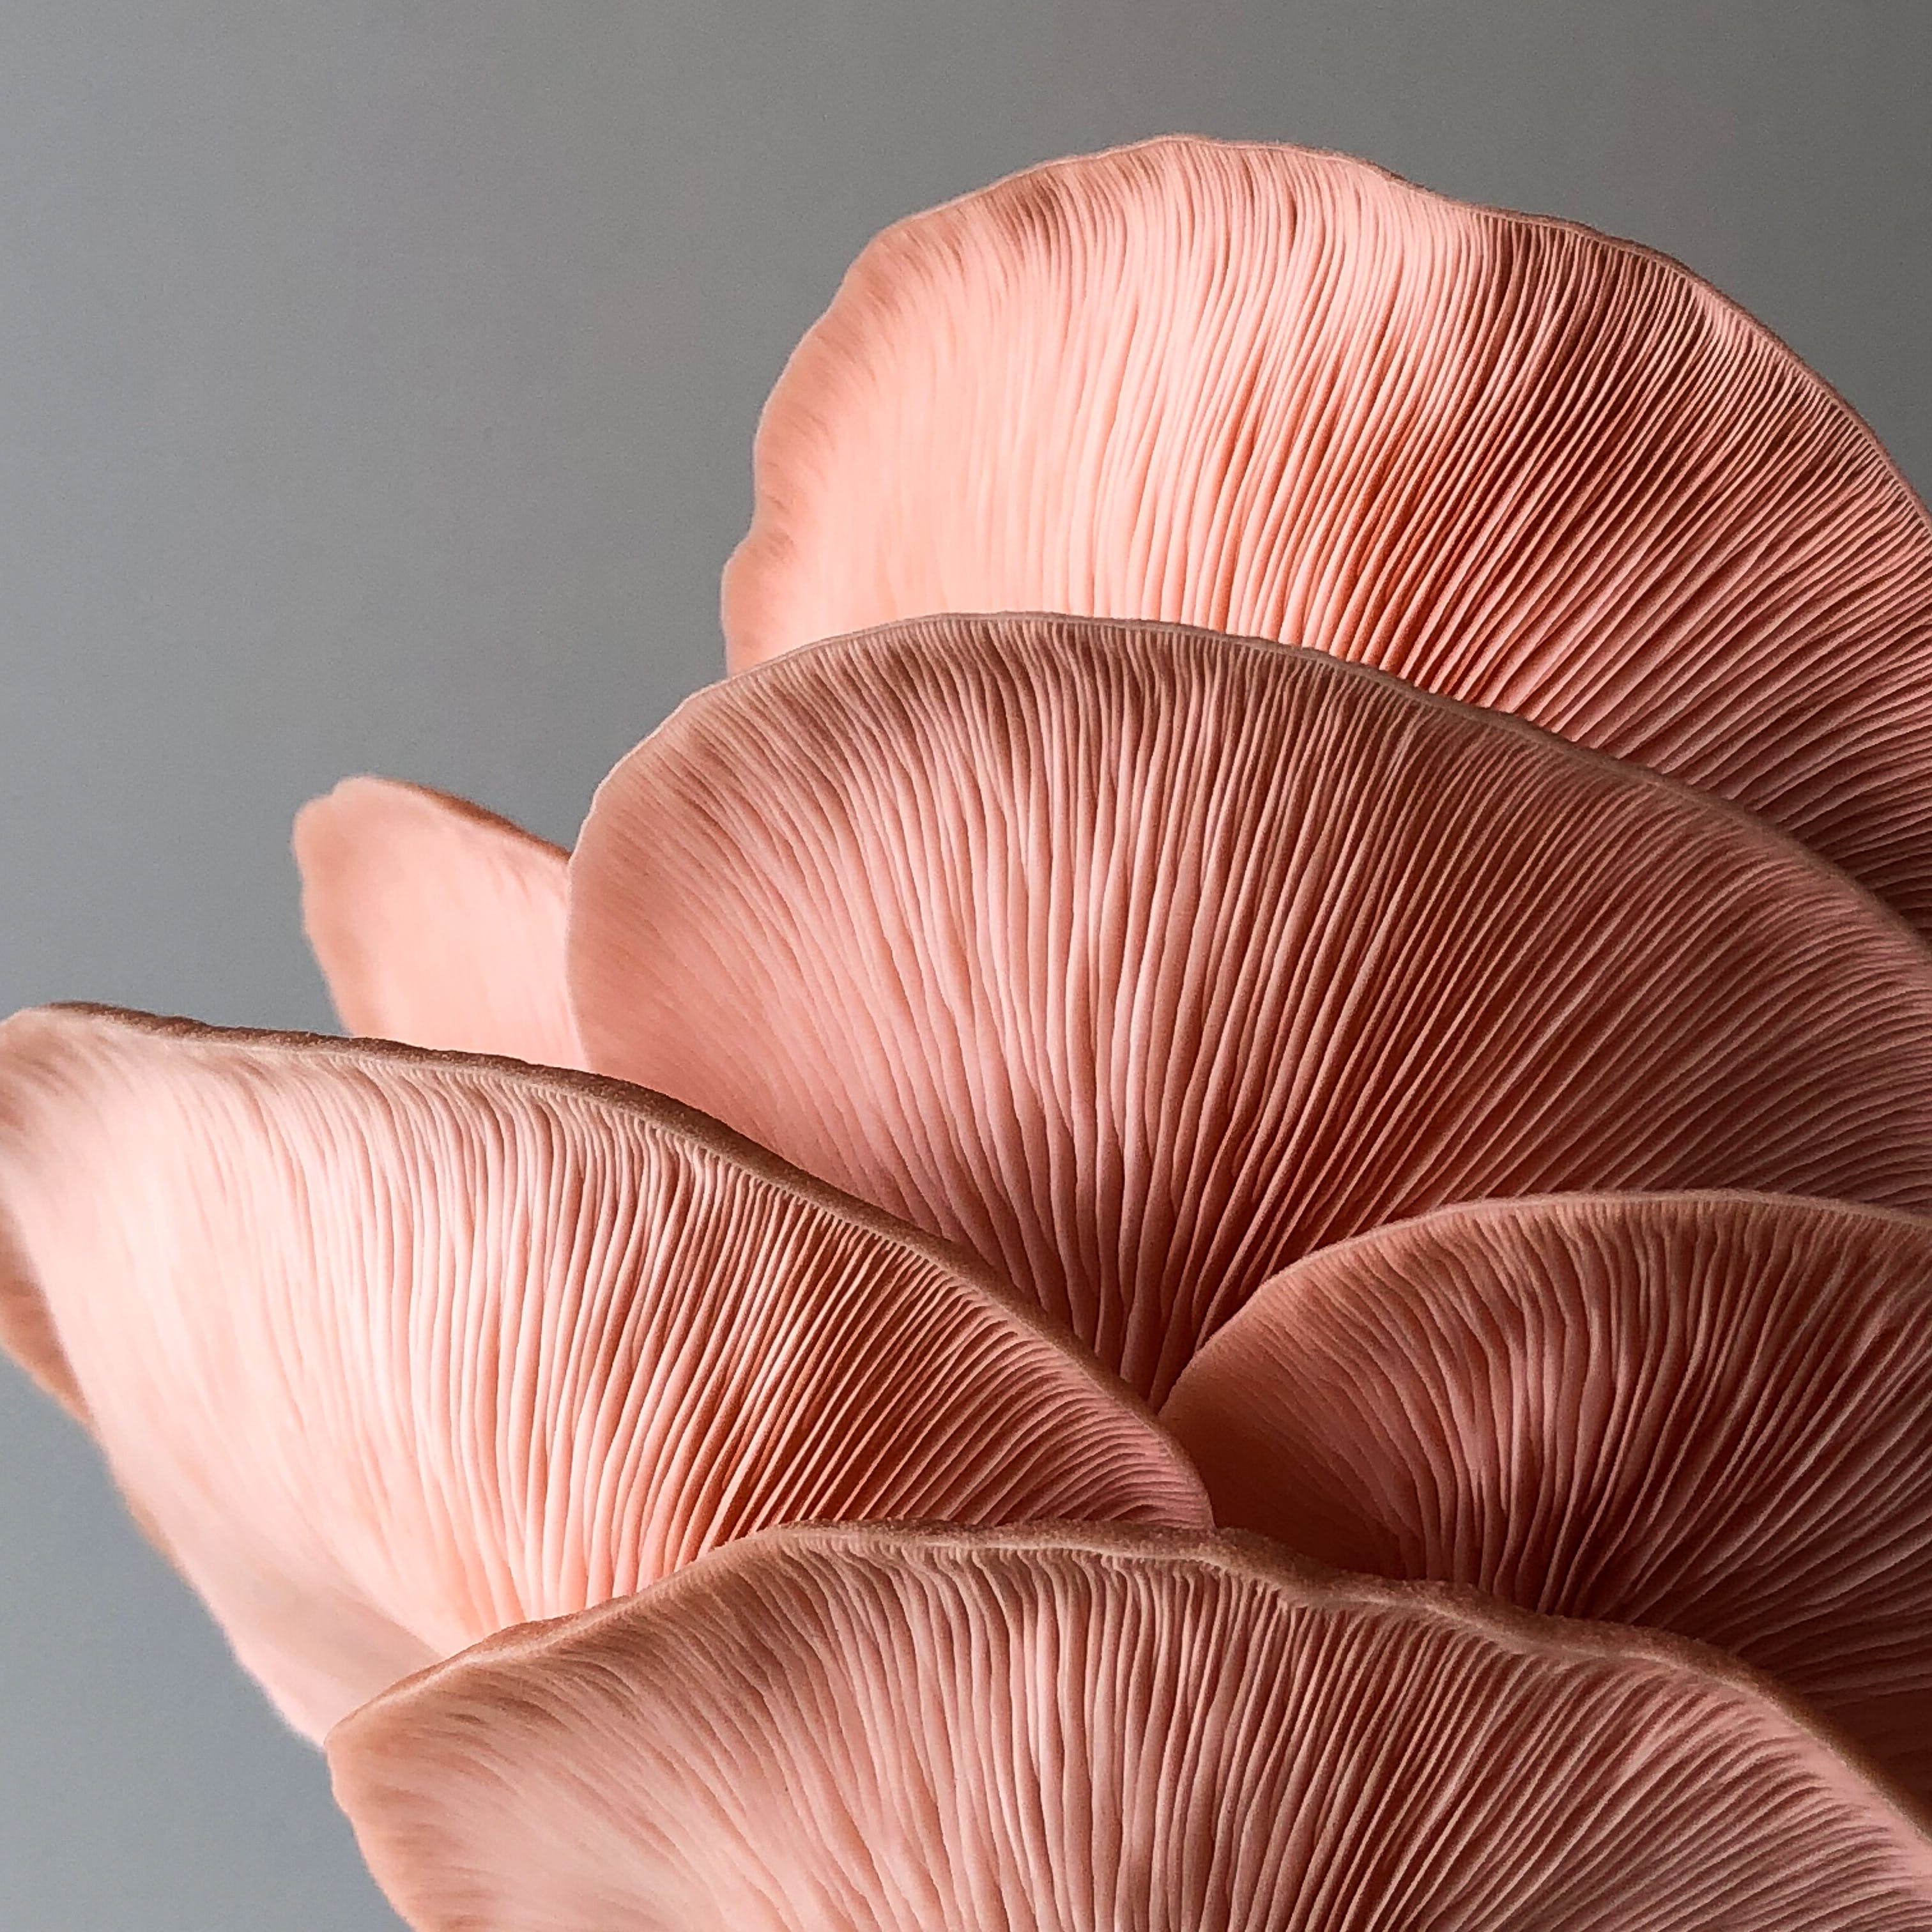 Mushroom Growing Masterclass - Geraldton Accommodation